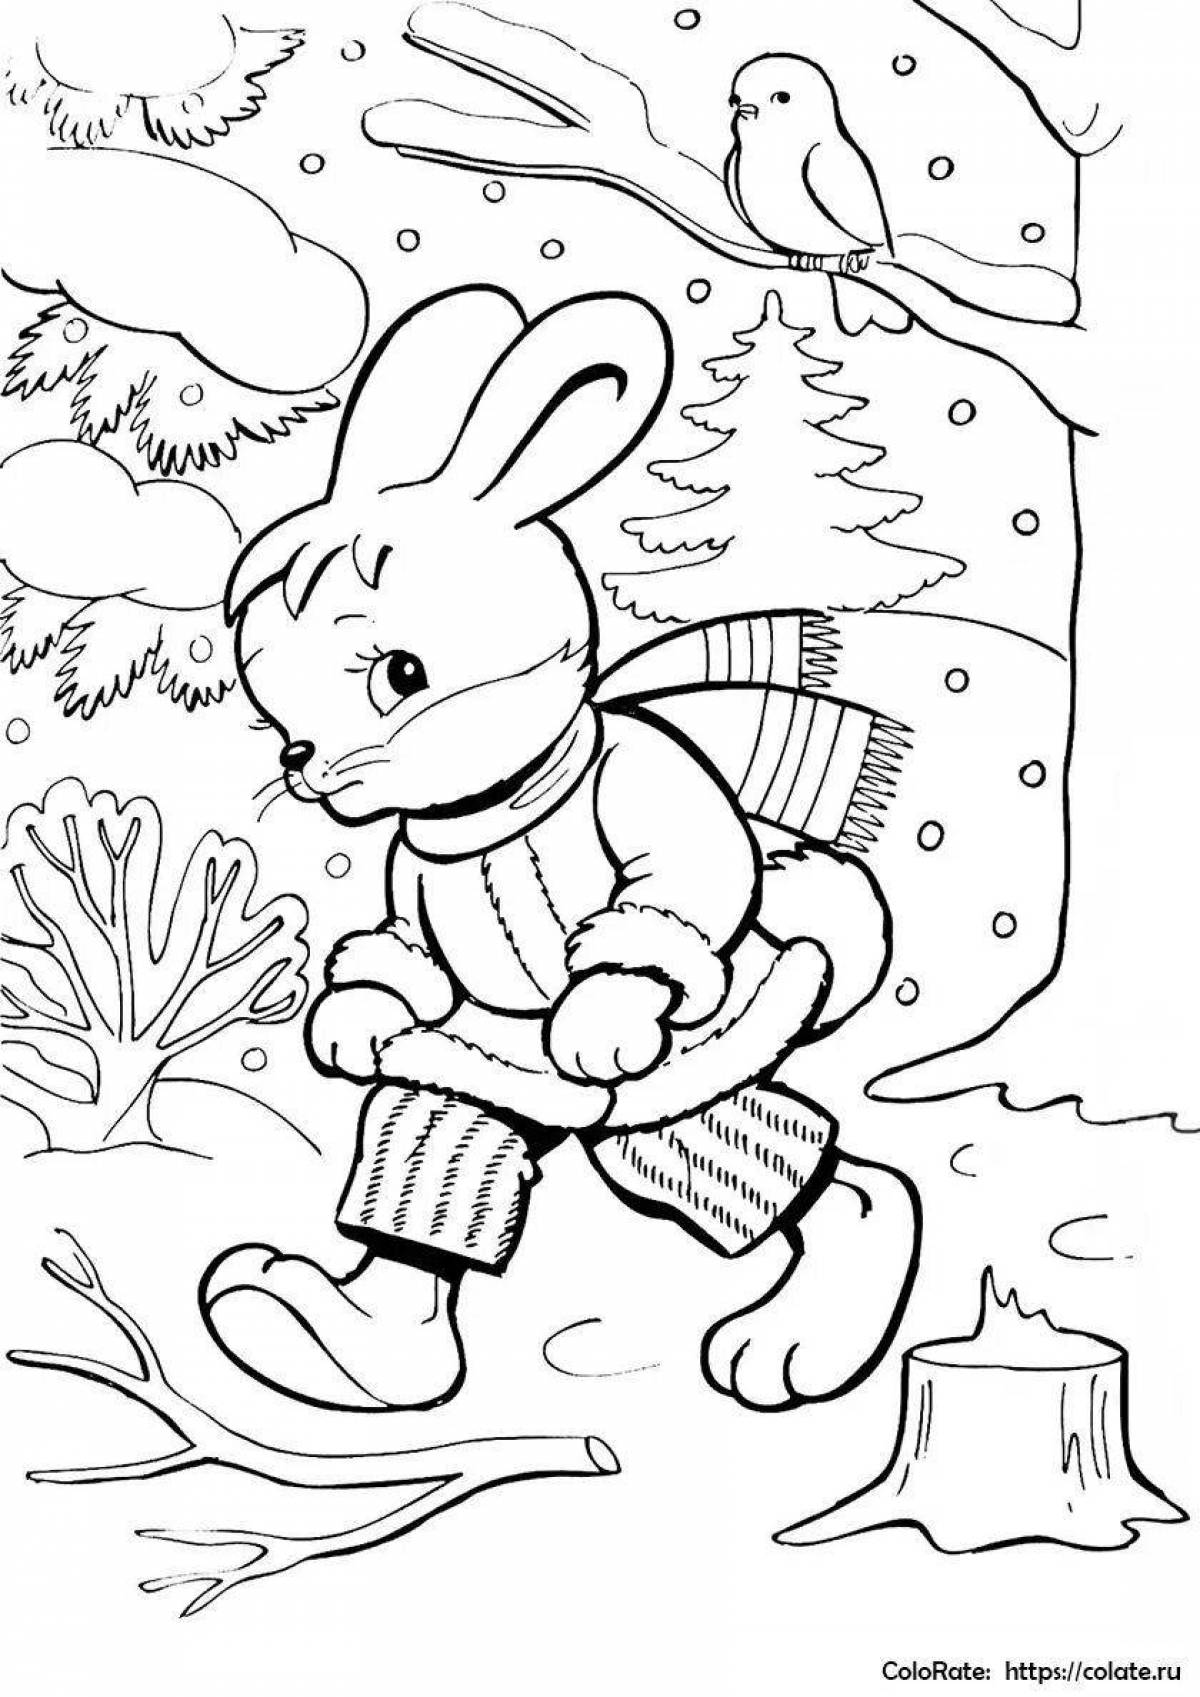 Plush rabbit coloring book in winter